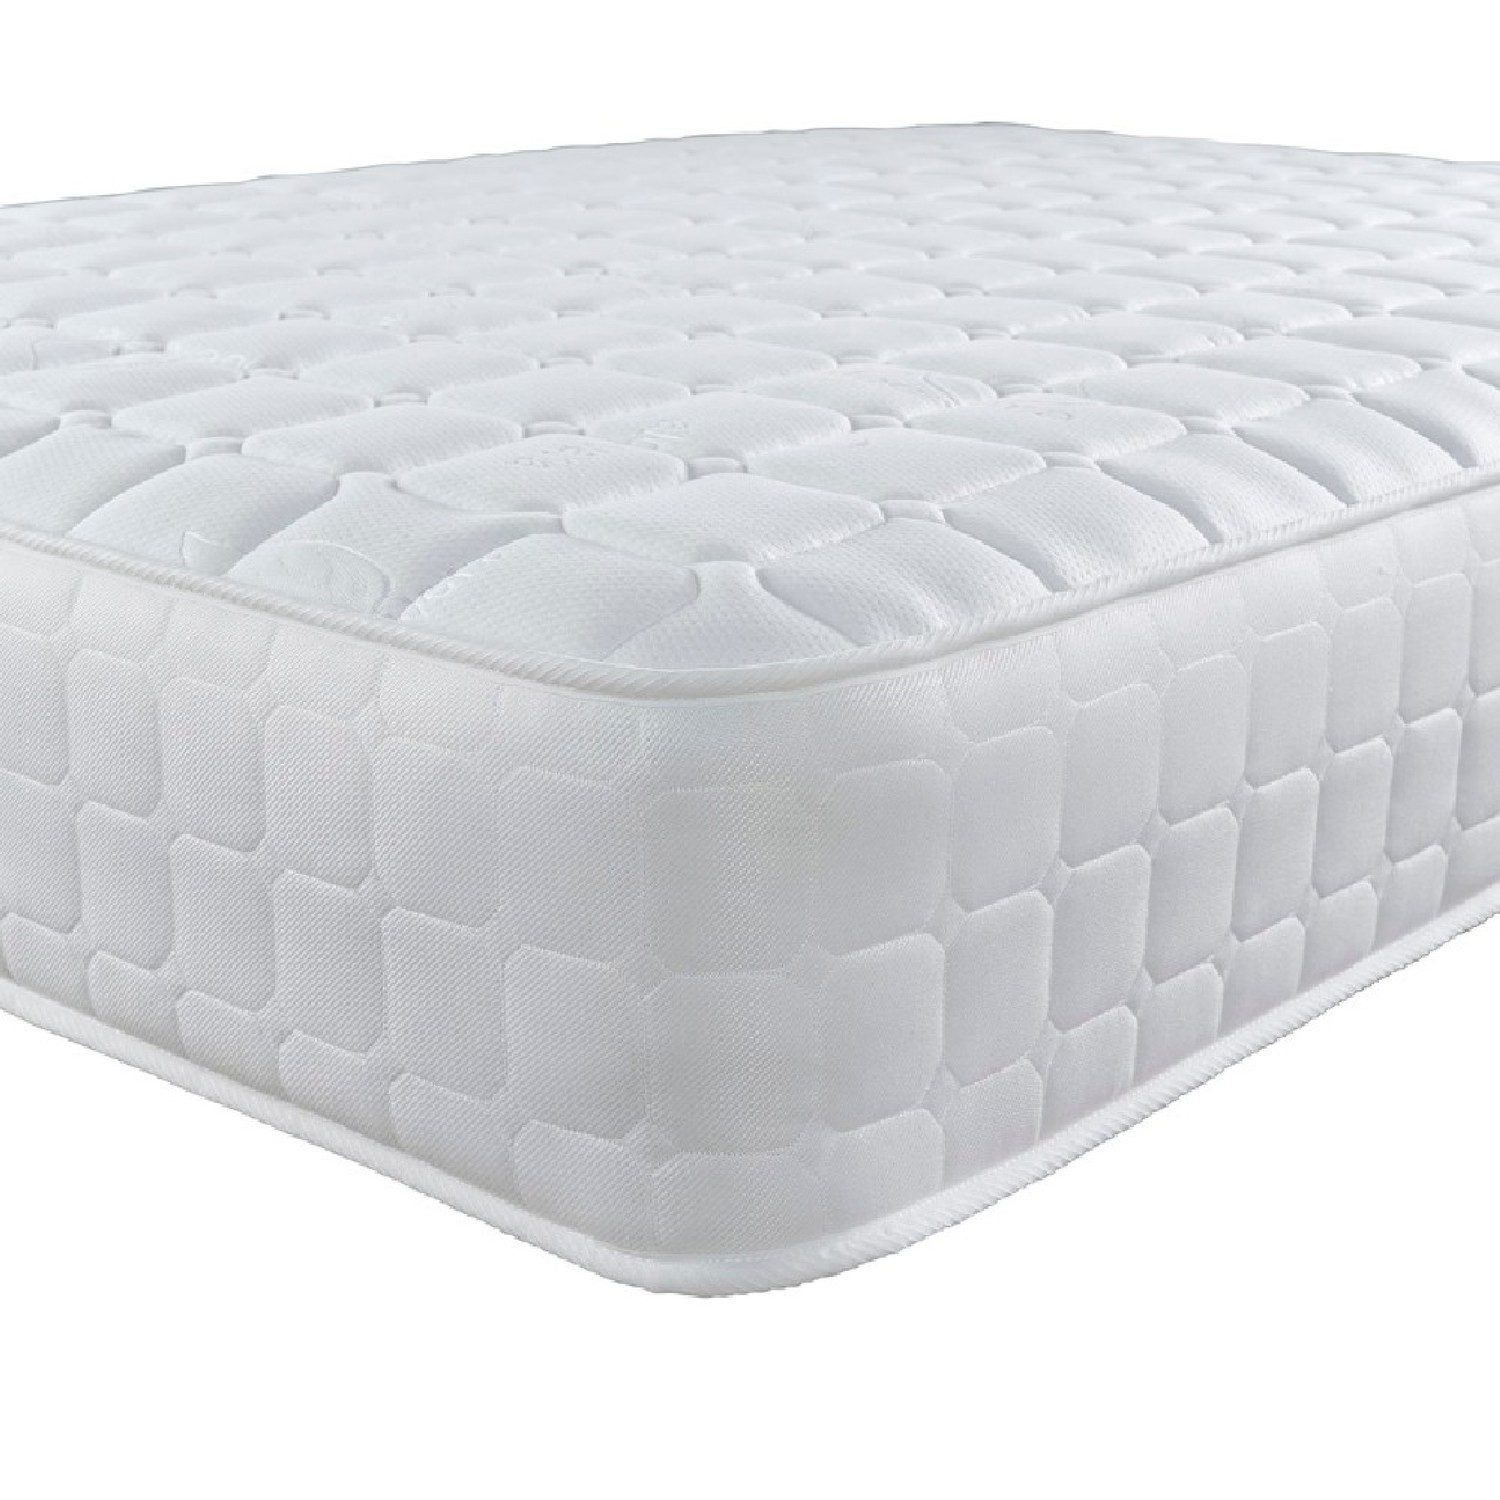 Aspire furniture aloe vera eco memory wool & spring premium mattress - king size